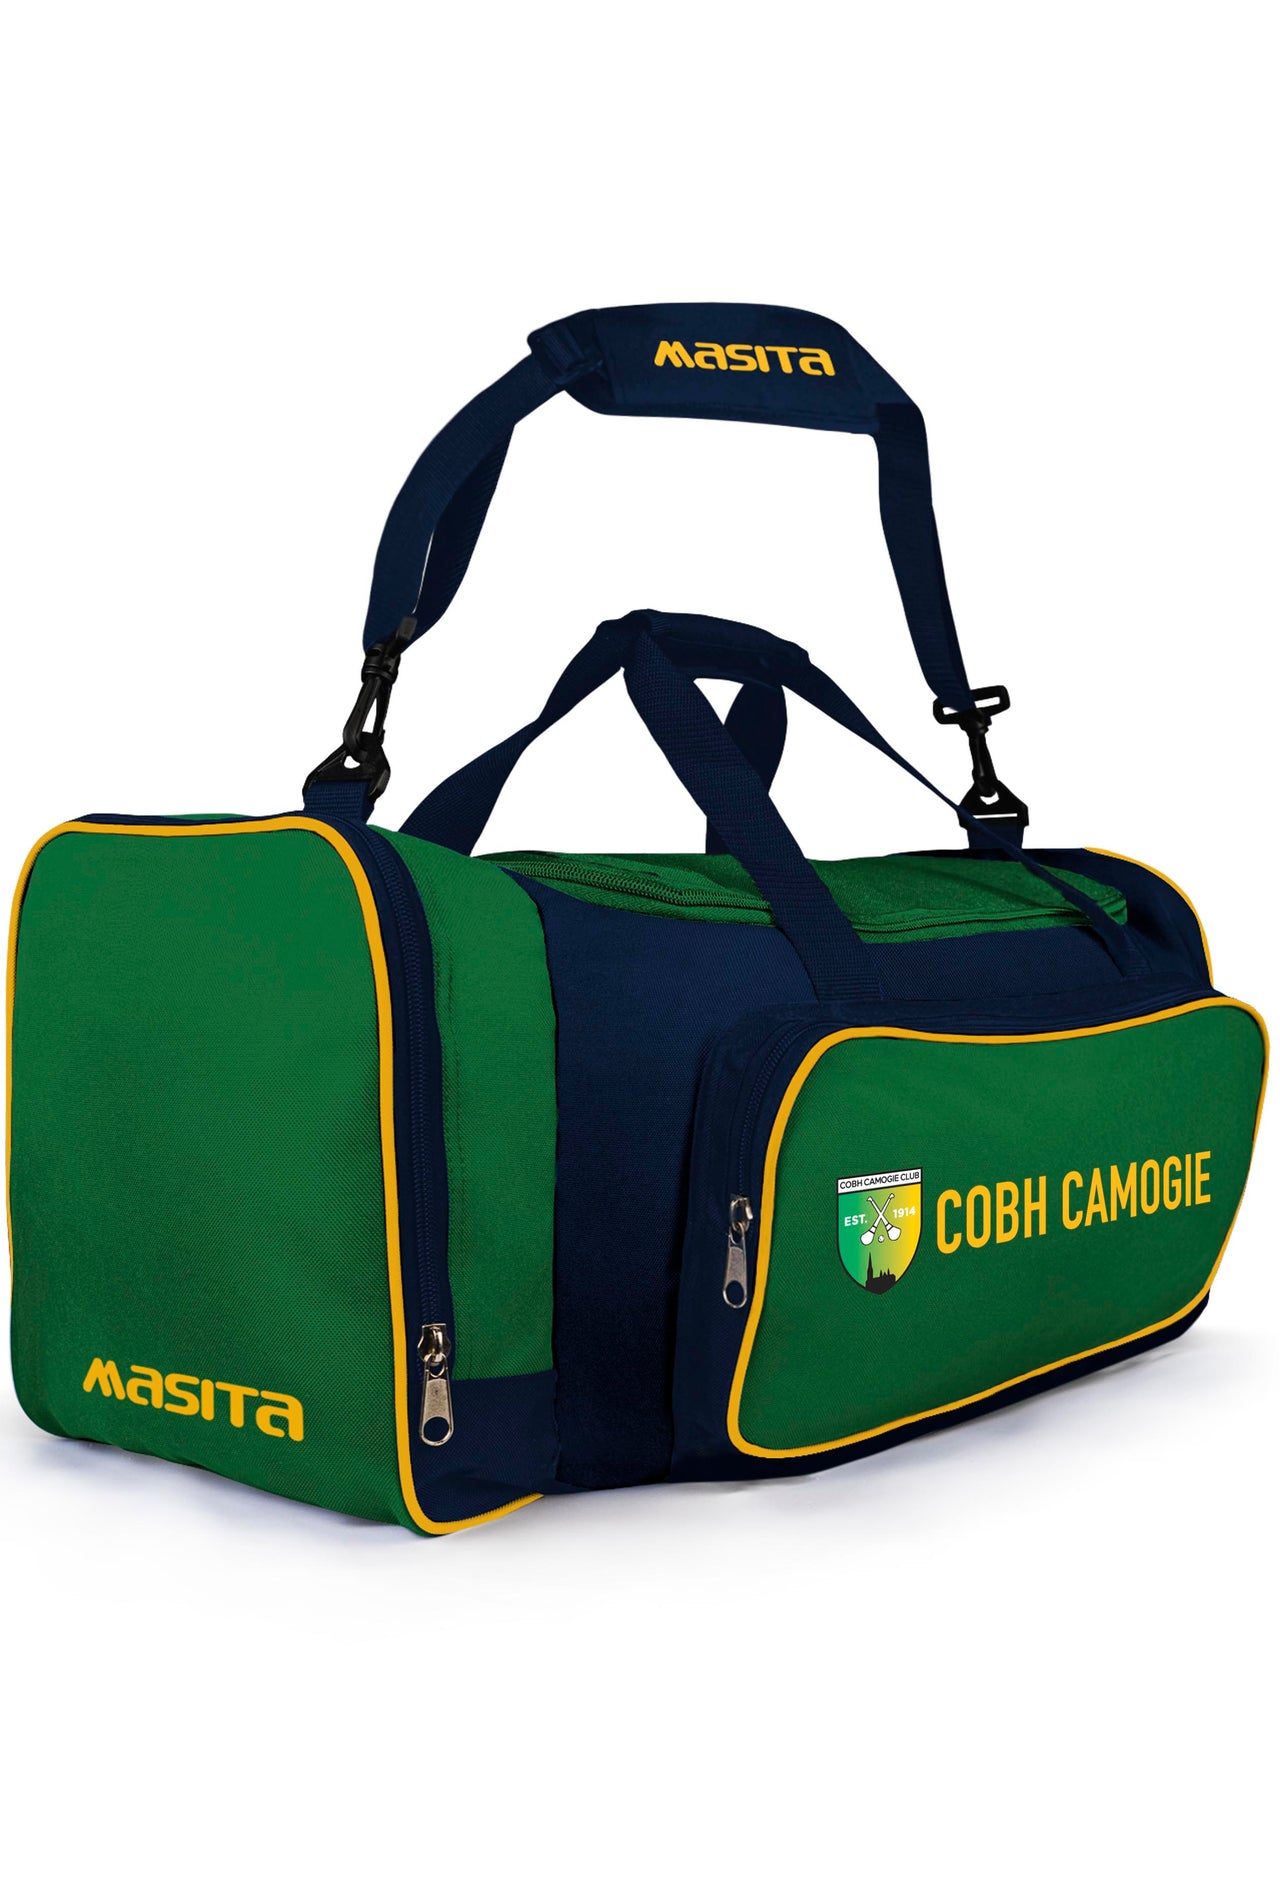 Cobh Camogie Tara Style Club Bag